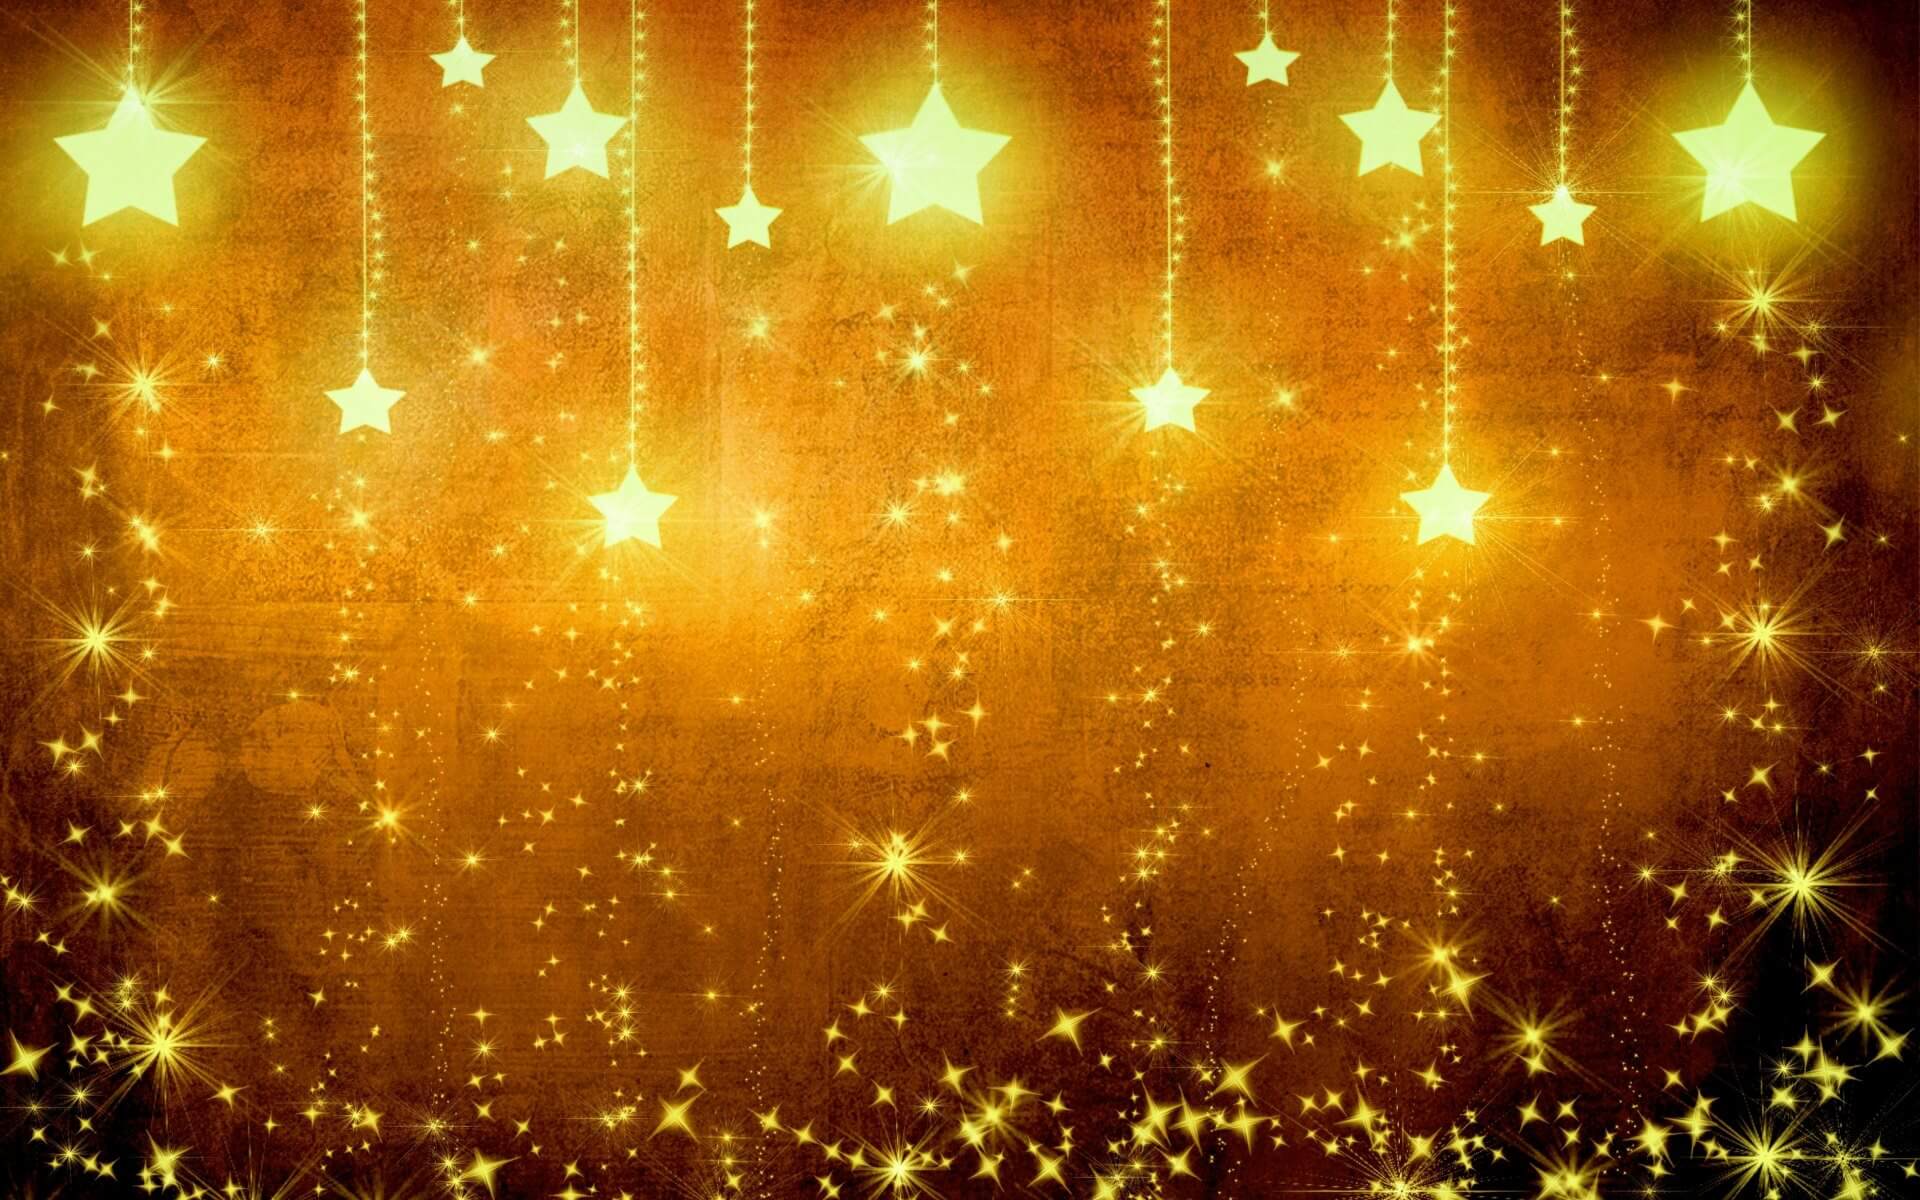 golden stars wallpaper background, wallpapers